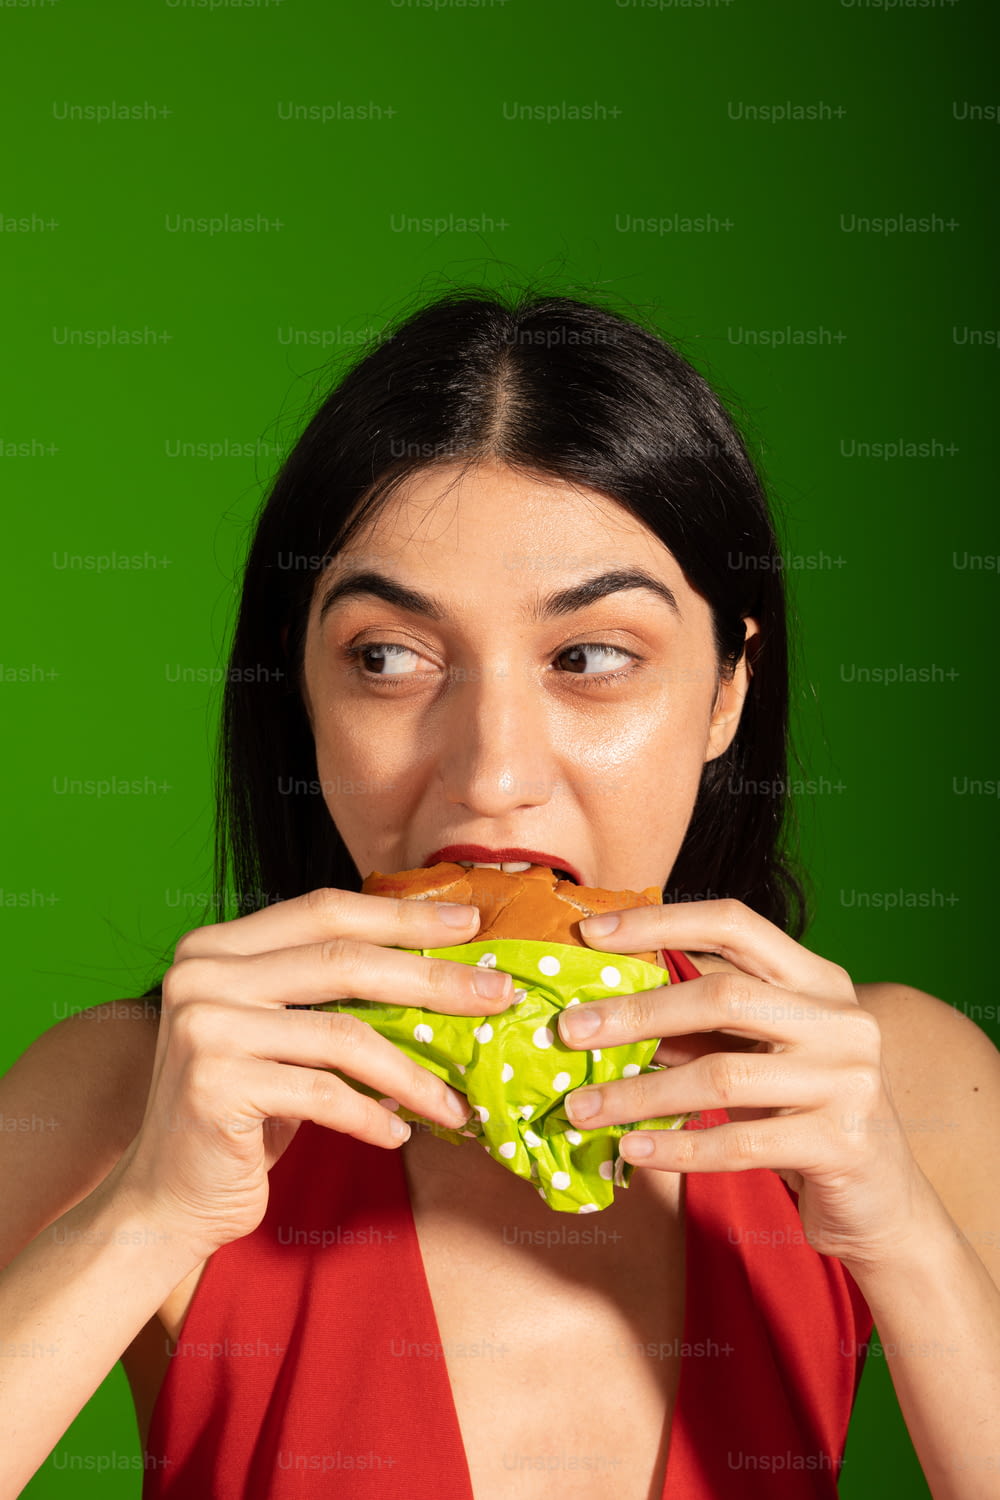 Une femme en robe rouge mangeant un sandwich